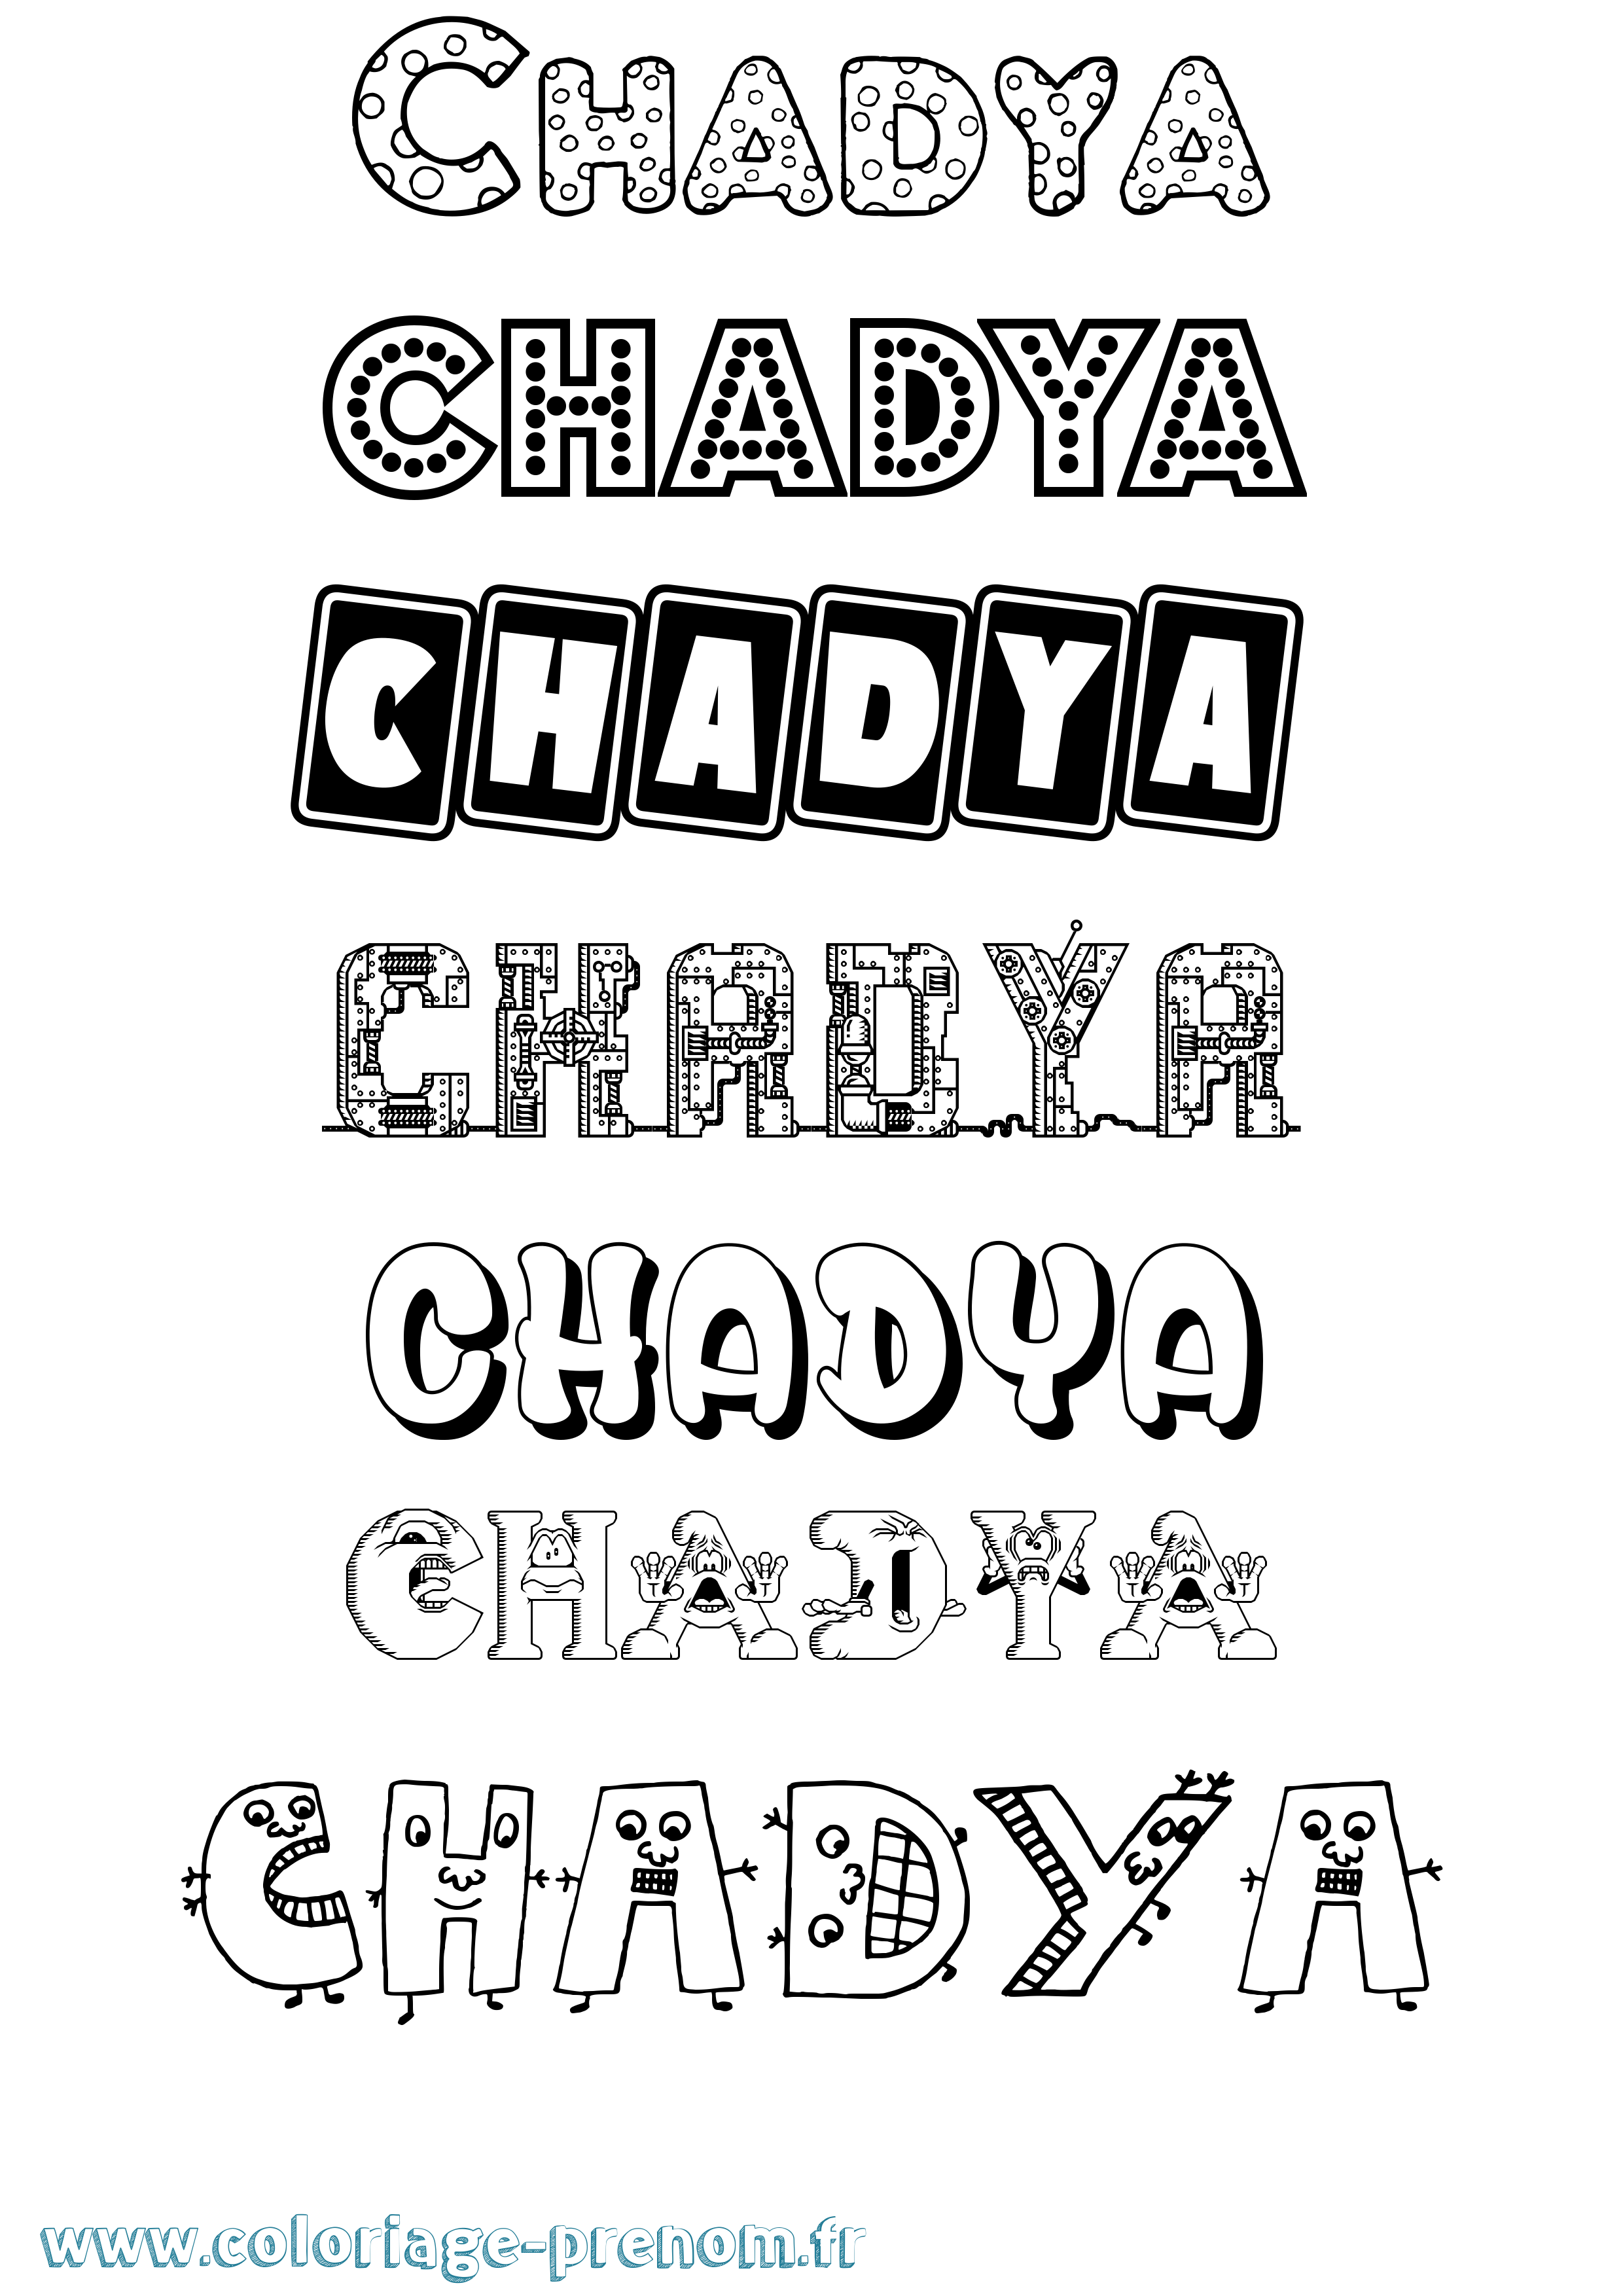 Coloriage prénom Chadya Fun